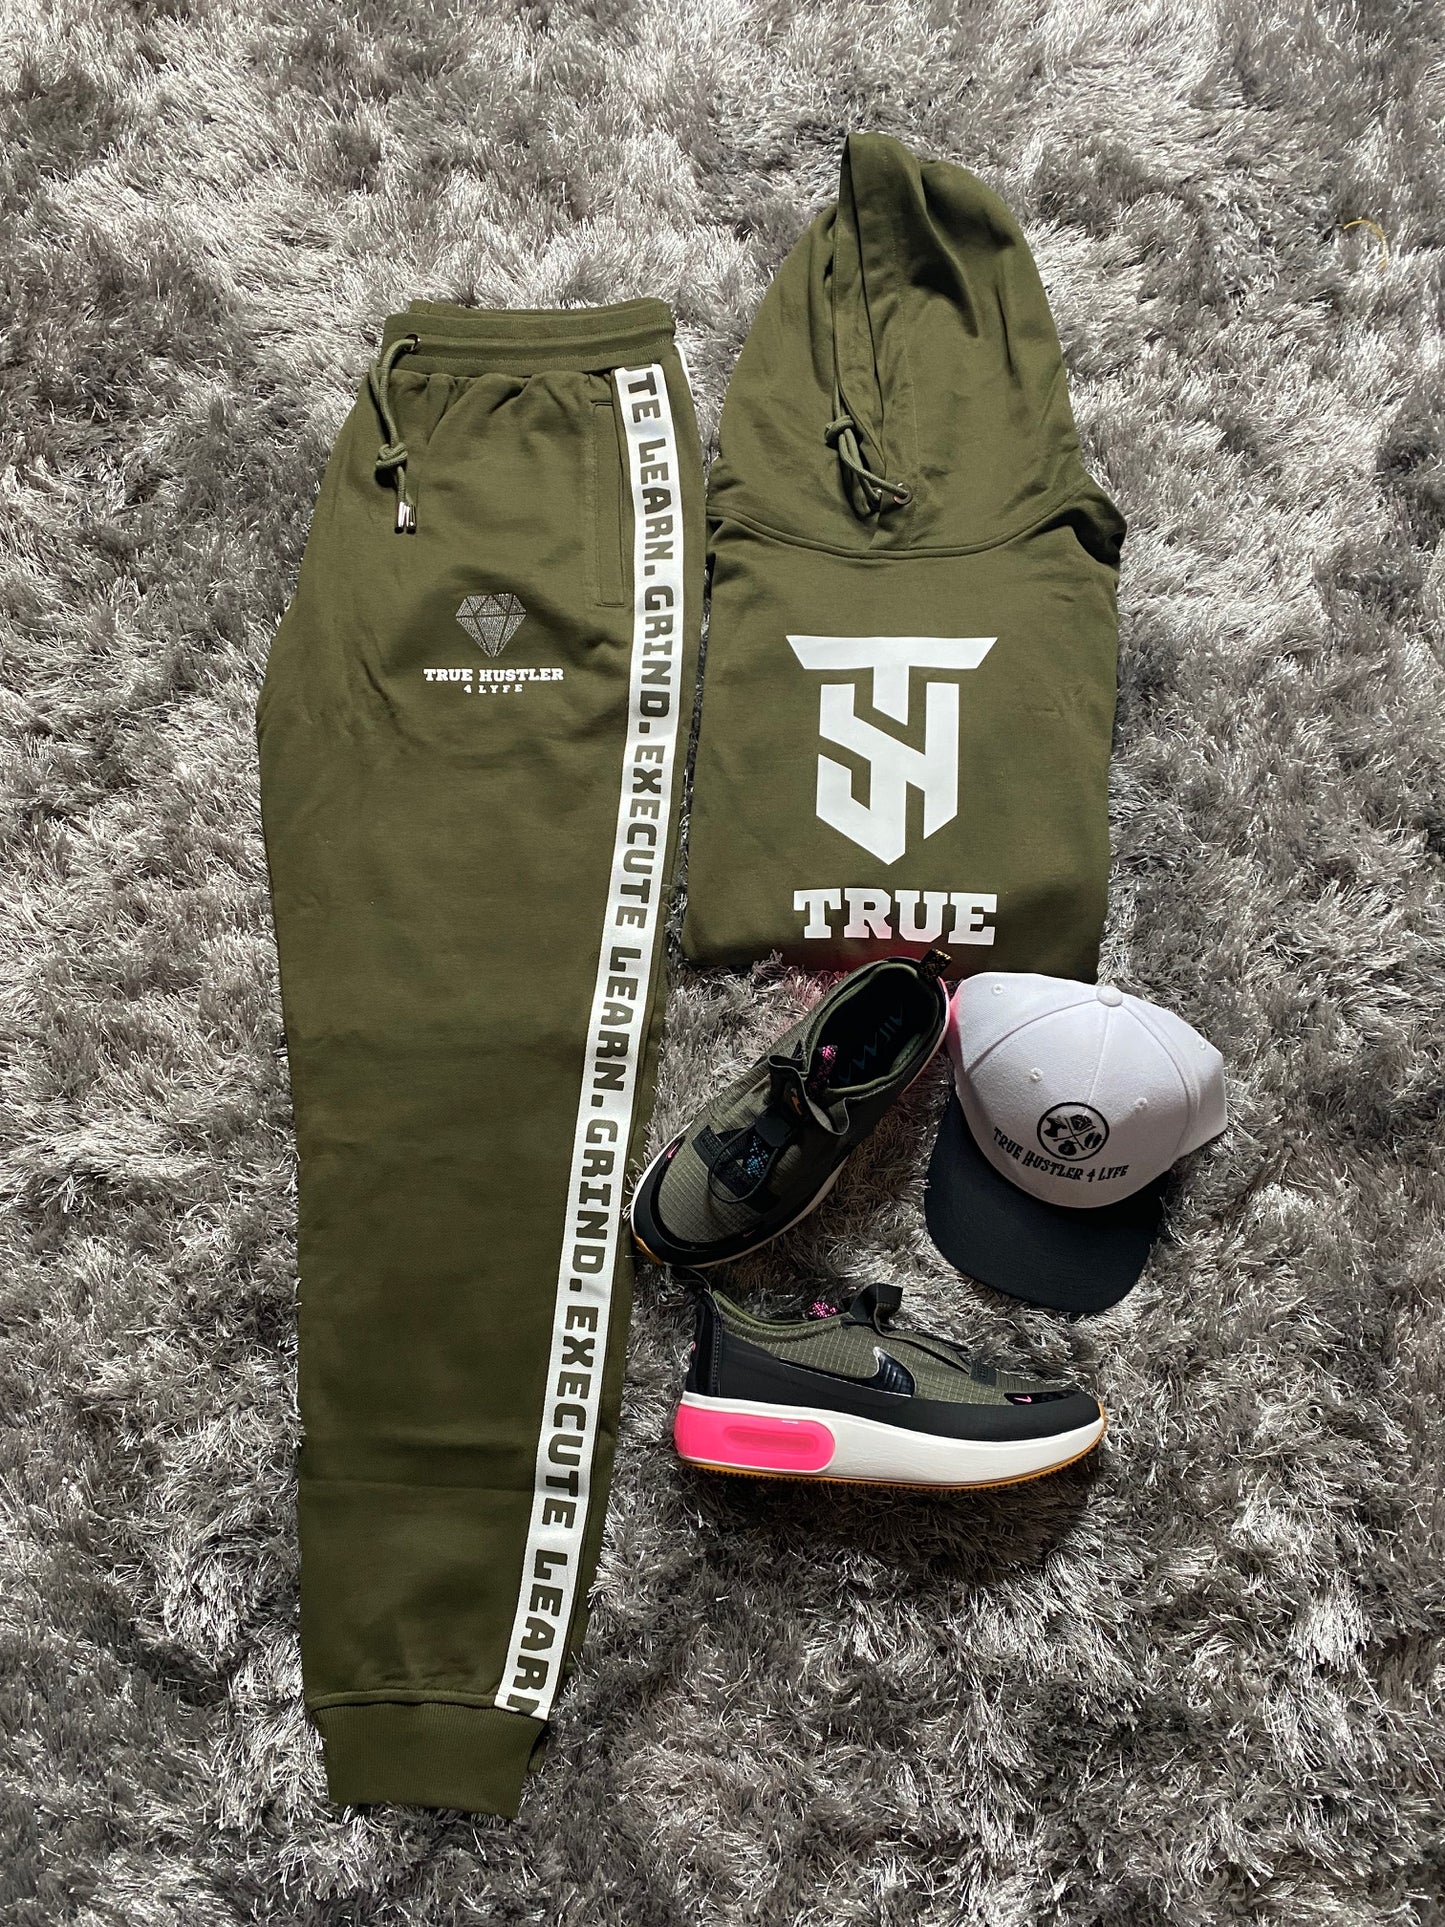 True Hustler 4 Lyfe "LGE" Collection Military Green Luxury Jogging Suit ( Unisex)